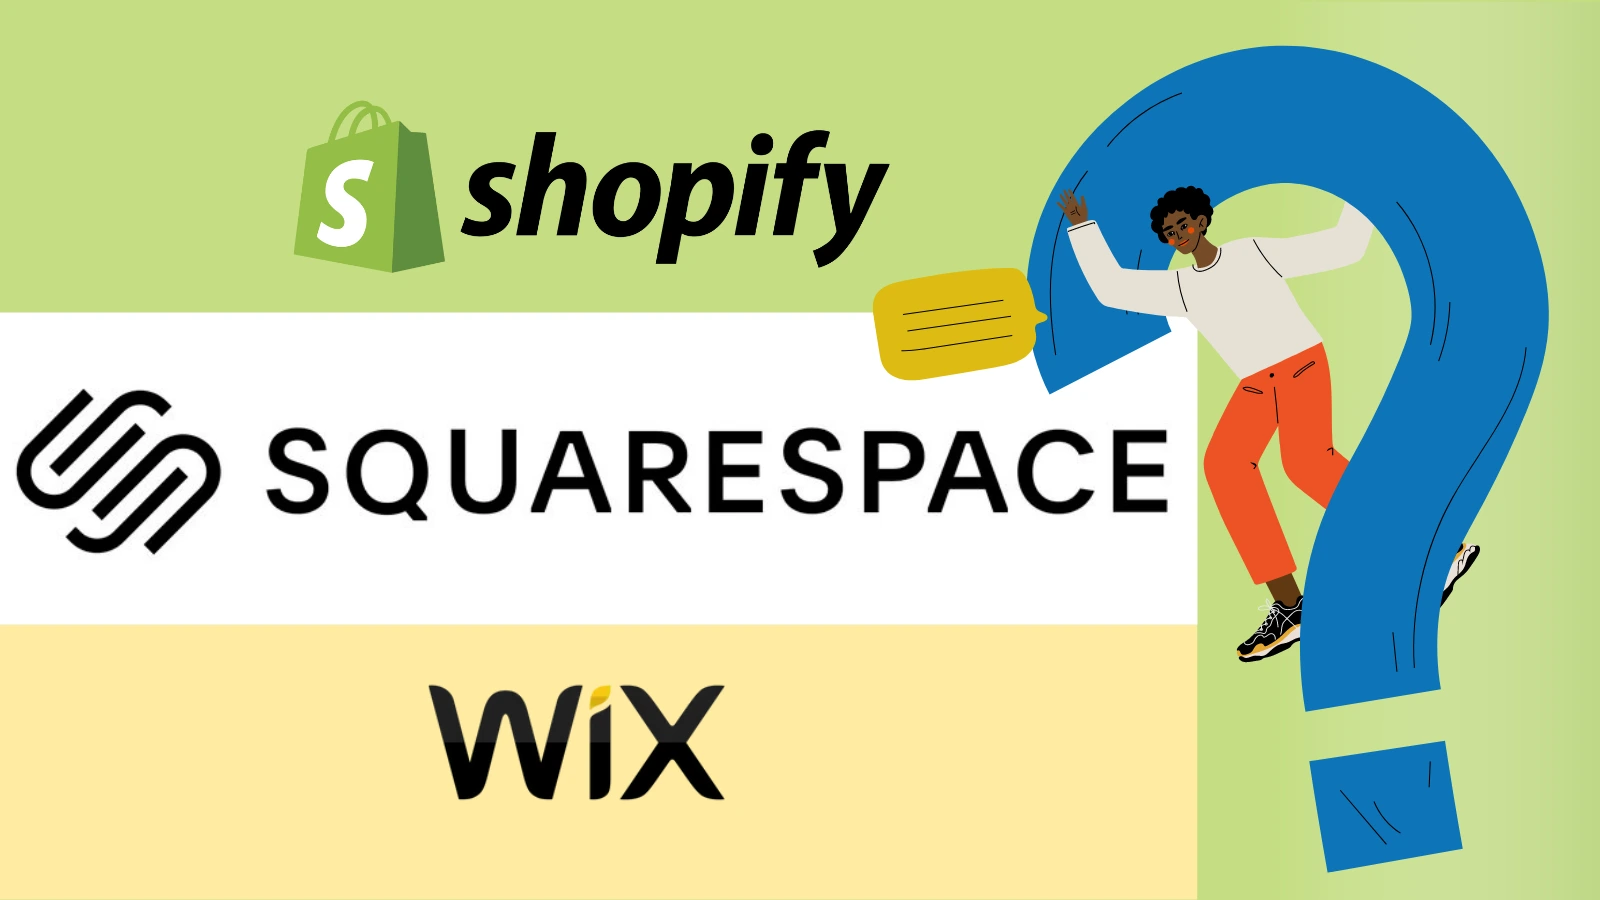 Shopify vs Wix vs Squarespace